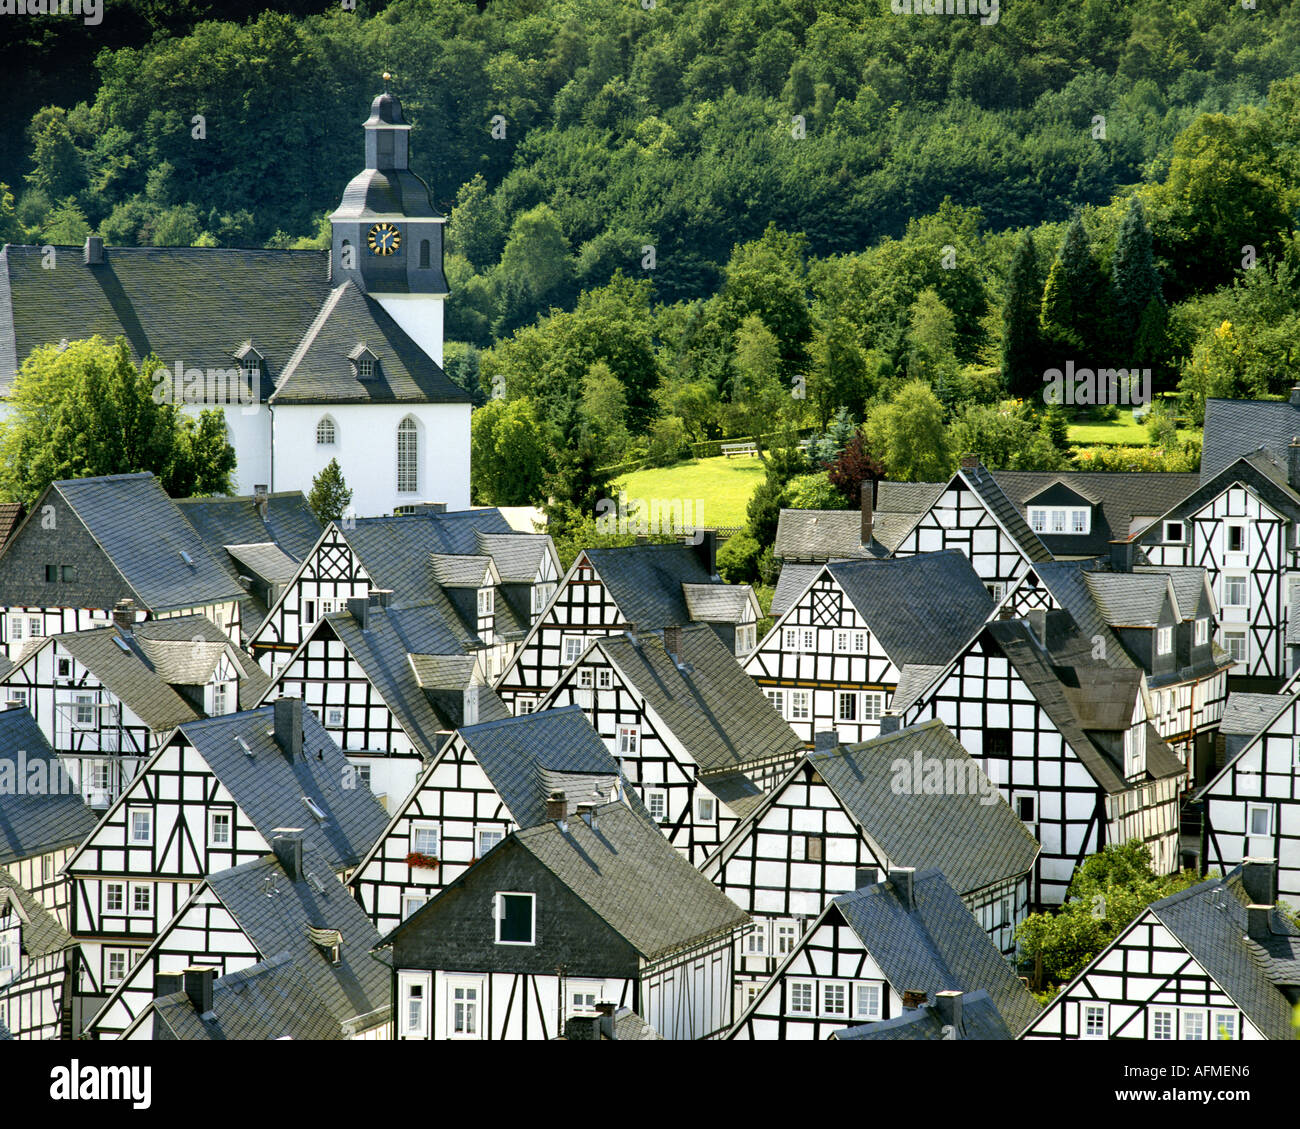 DE - NORTH-RHINE-WESTPHALIA: Picturesque village of Freudenberg Stock Photo